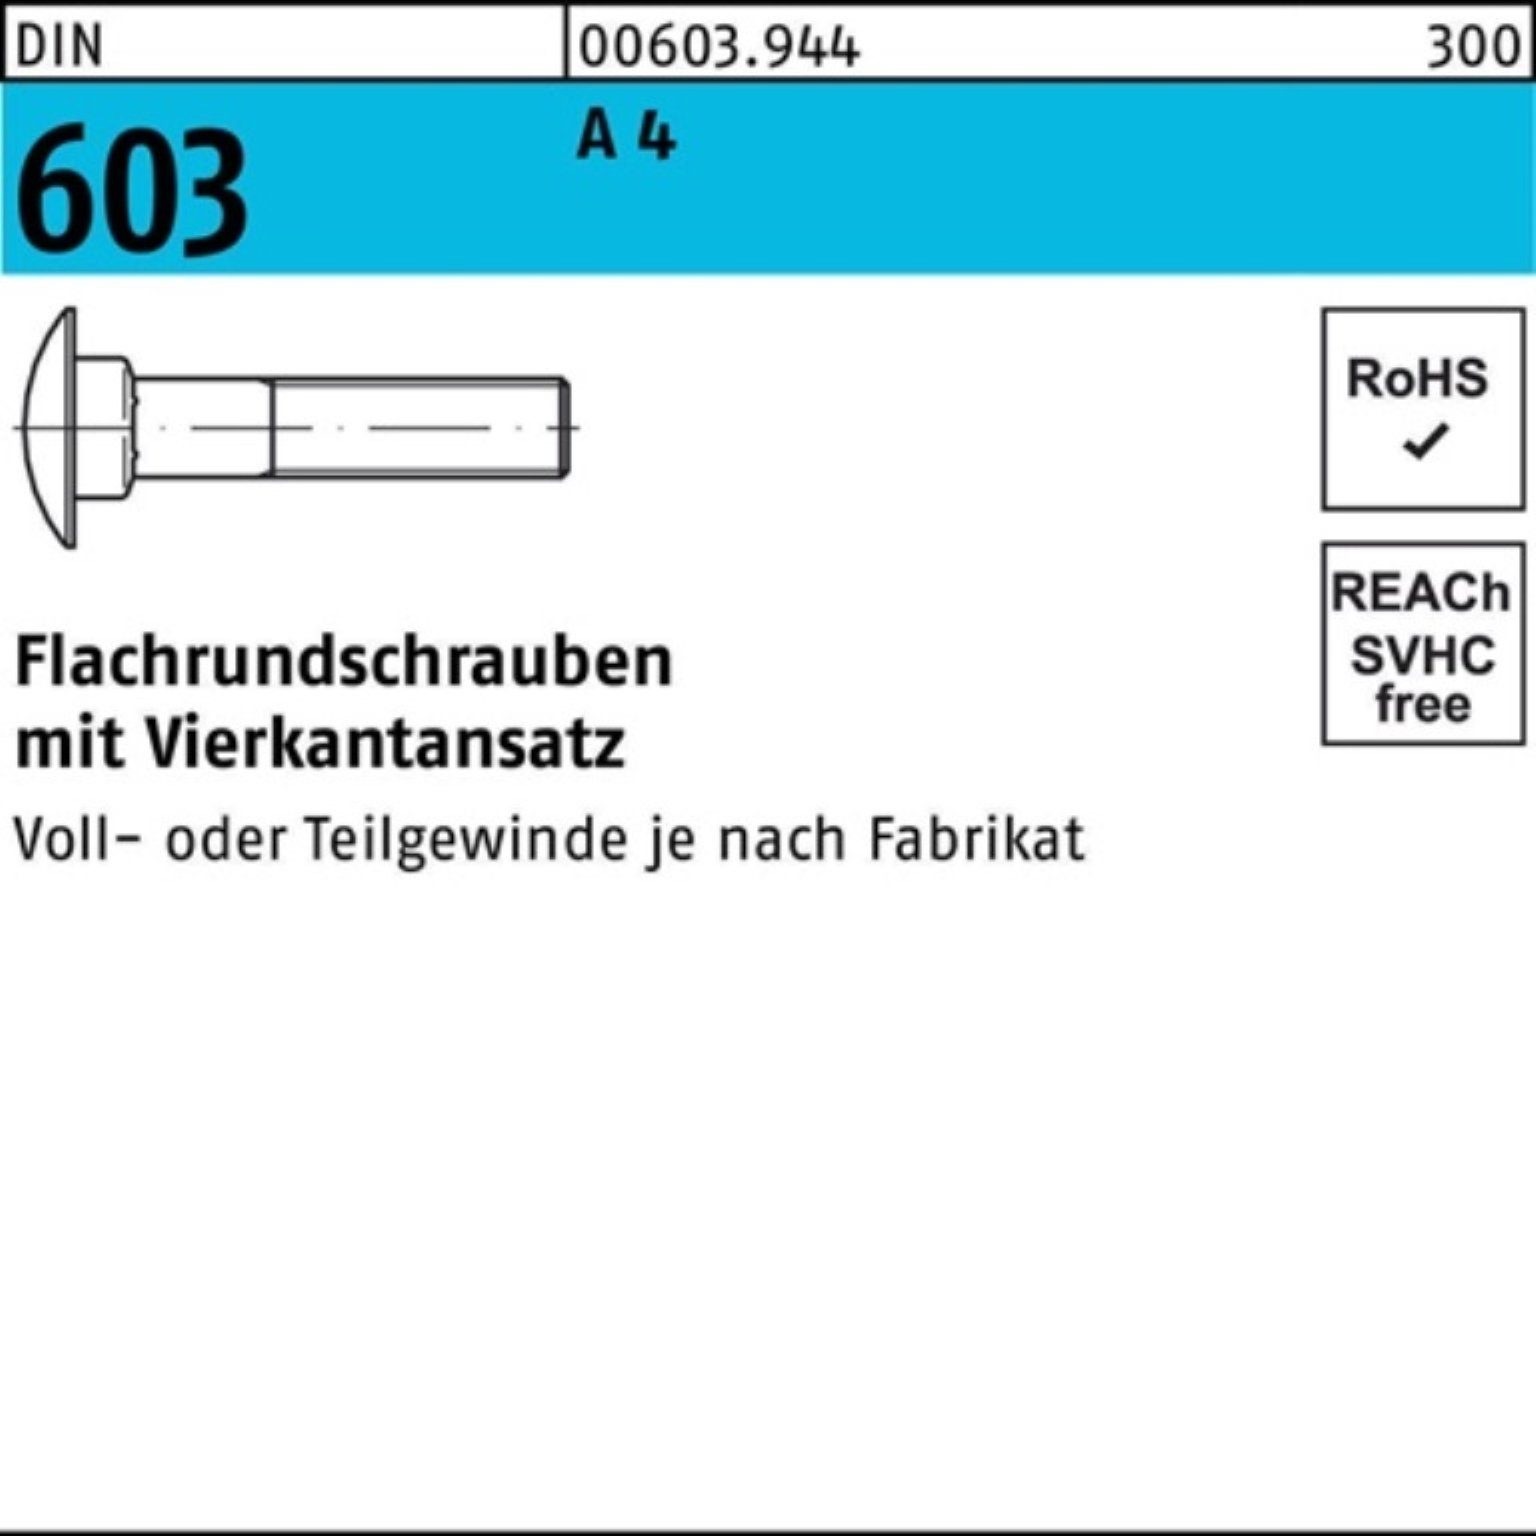 Reyher Schraube 100er Pack Flachrundschraube DIN 150 4 M16x 603 Vierkantansatz St 1 A